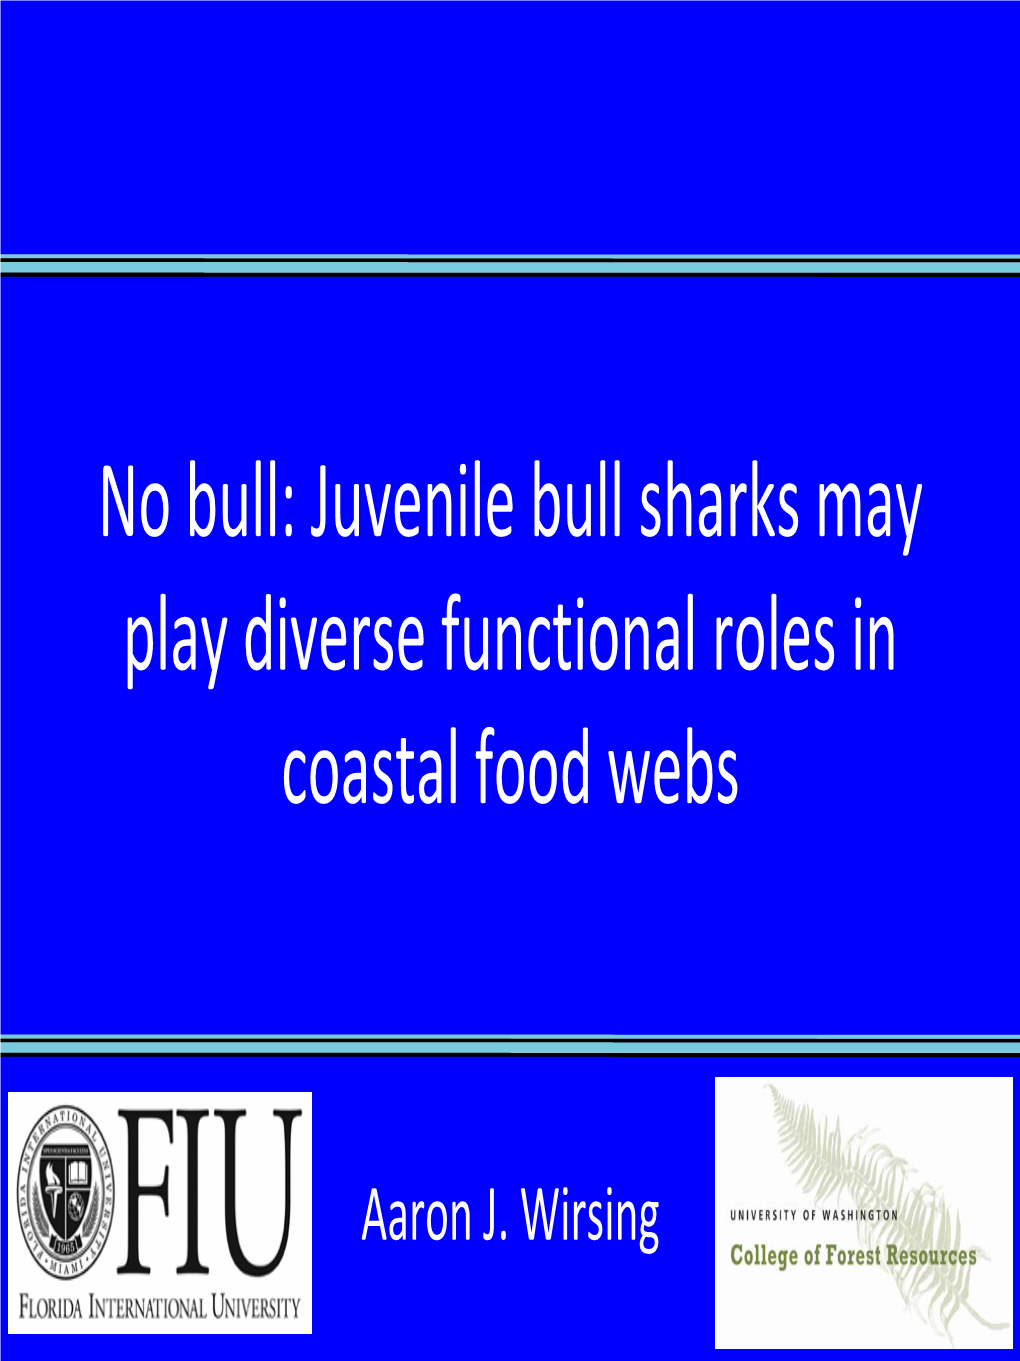 Juvenile Bull Sharks May Play Diverse Functional Roles in Coastal Food Webs